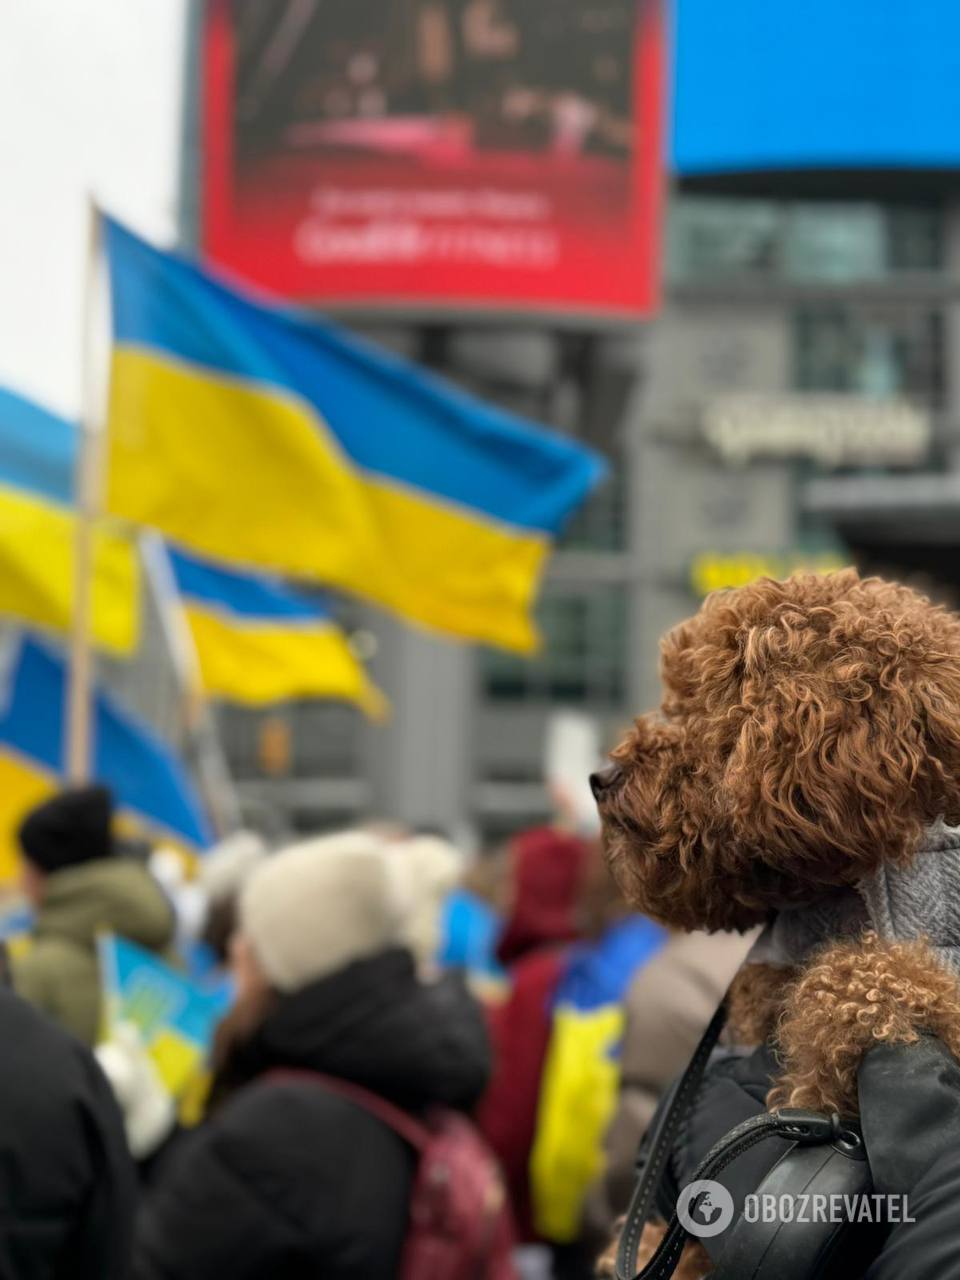 Ukrainians around the world hold rallies demanding increased military aid to Ukraine. Photos